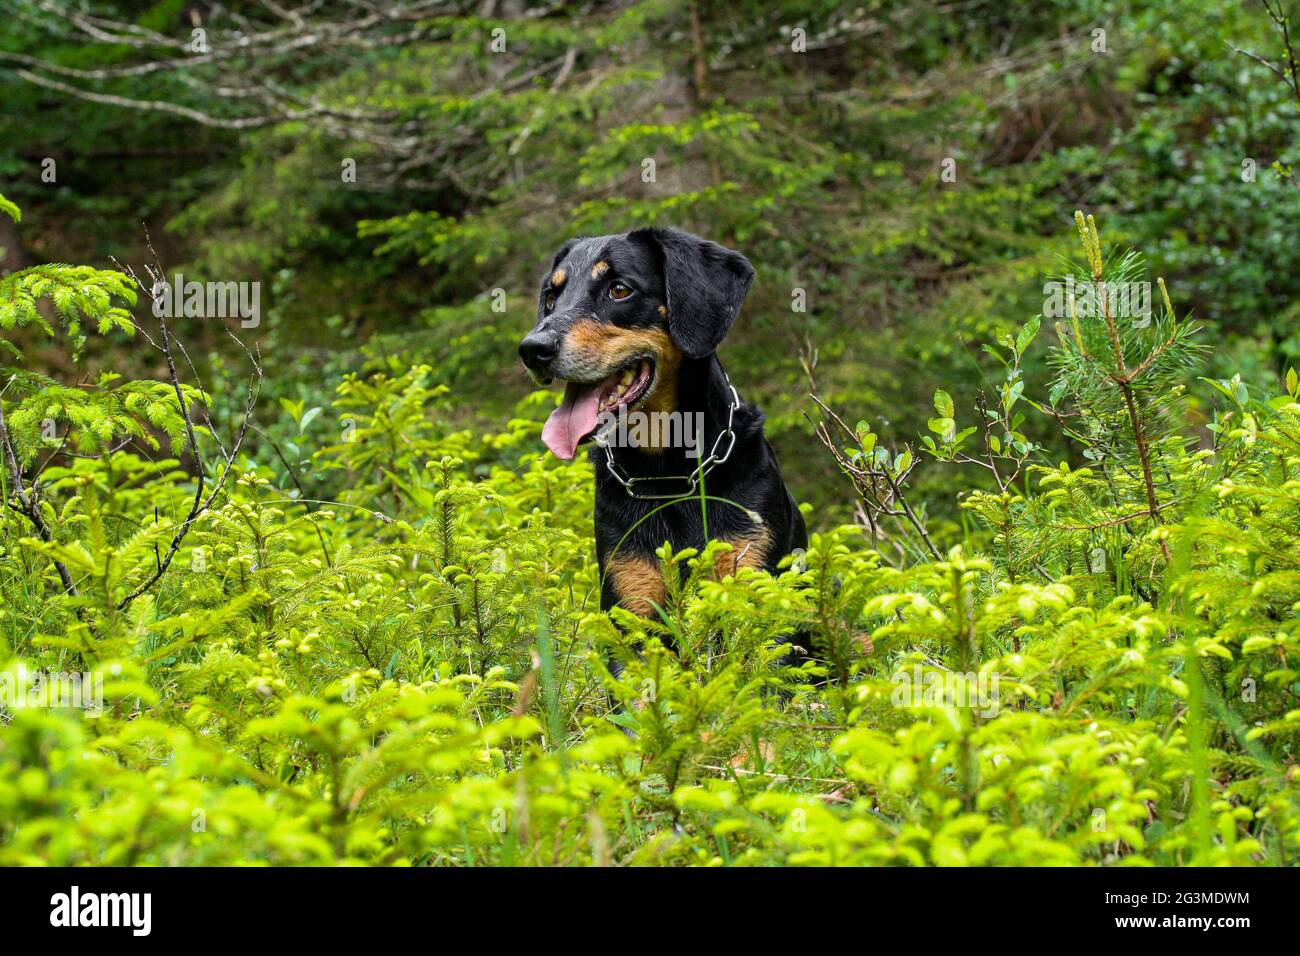 Cute New Zealand Huntaway dog resting in scenic green terrain Stock Photo